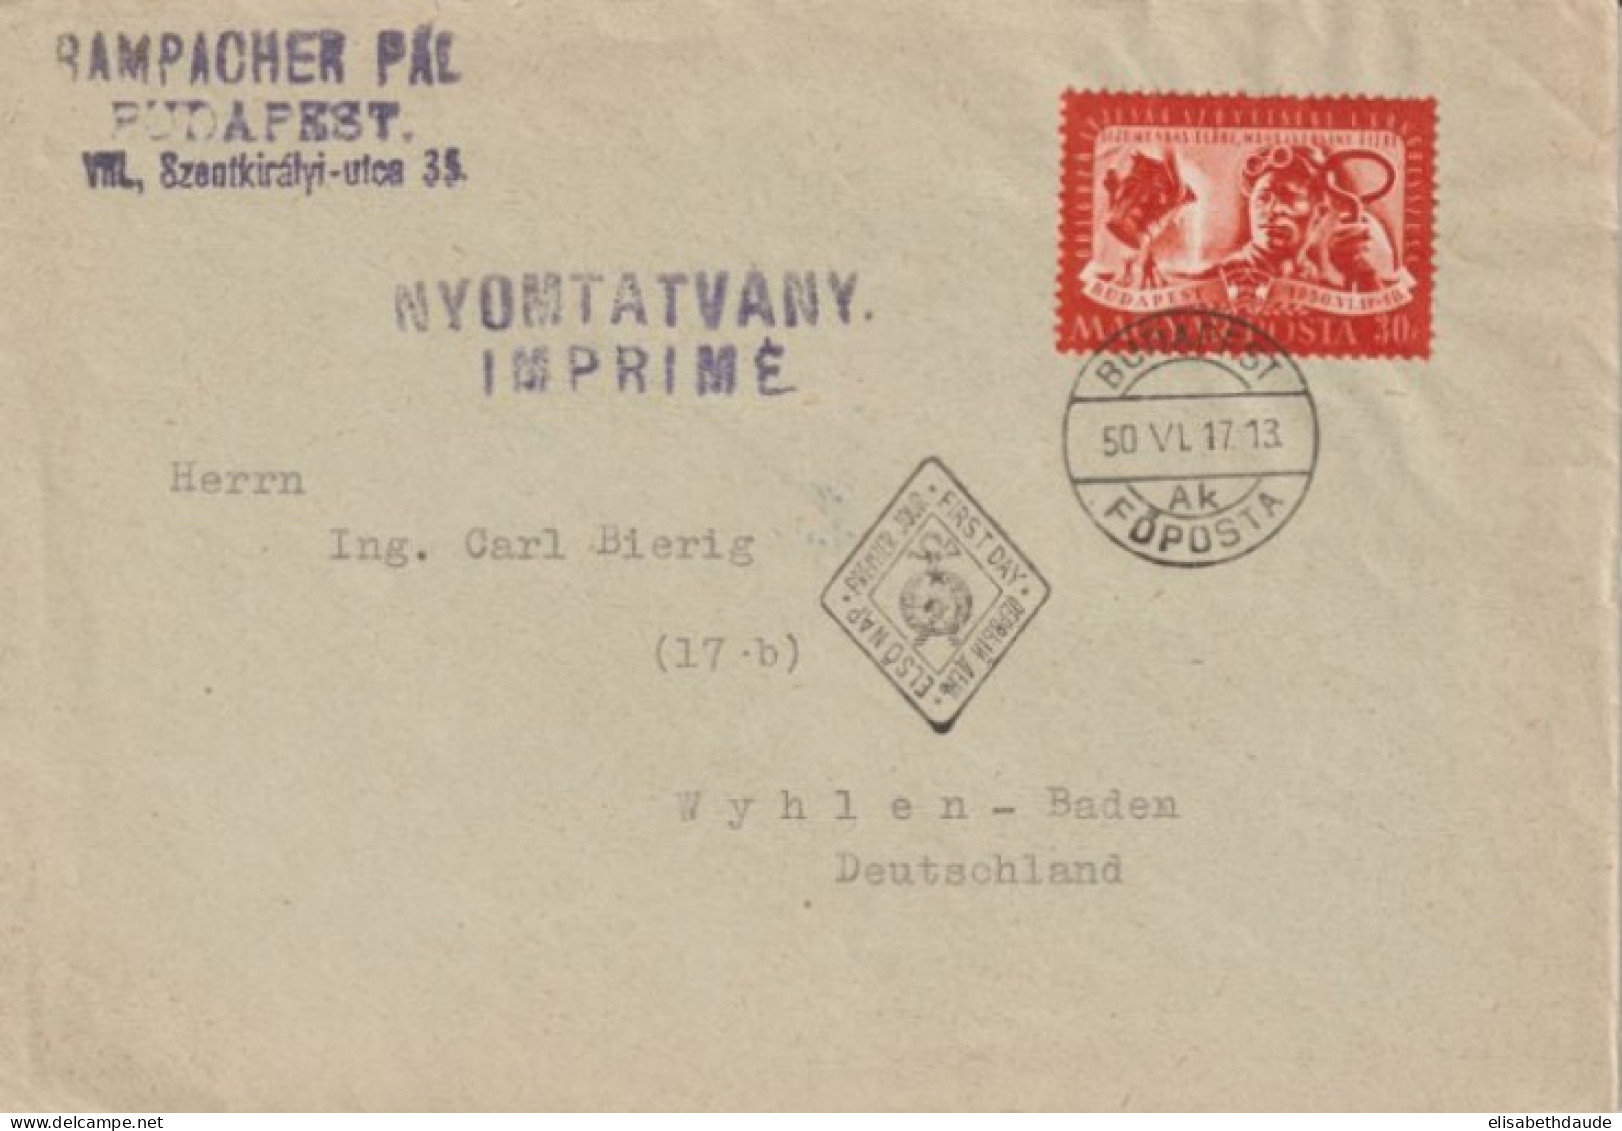 HONGRIE - 1950 - ENVELOPPE FDC De BUDAPEST => WYHLEN - BADEN (GERMANY) - FDC